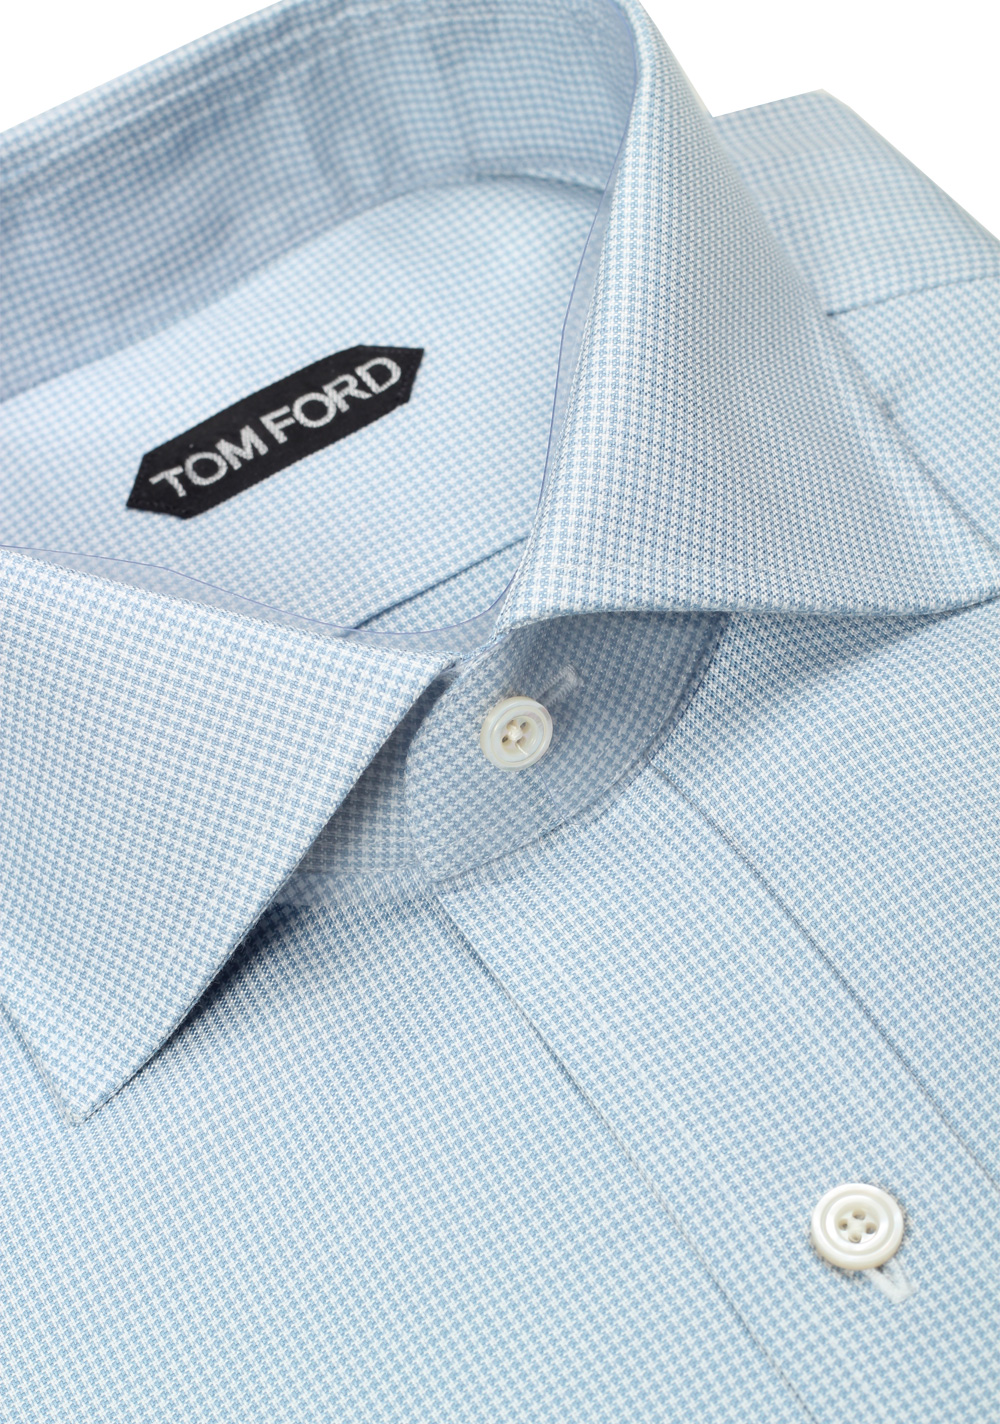 TOM FORD Patterned Blue / White Shirt Size 40 / 15,75 U.S. | Costume Limité